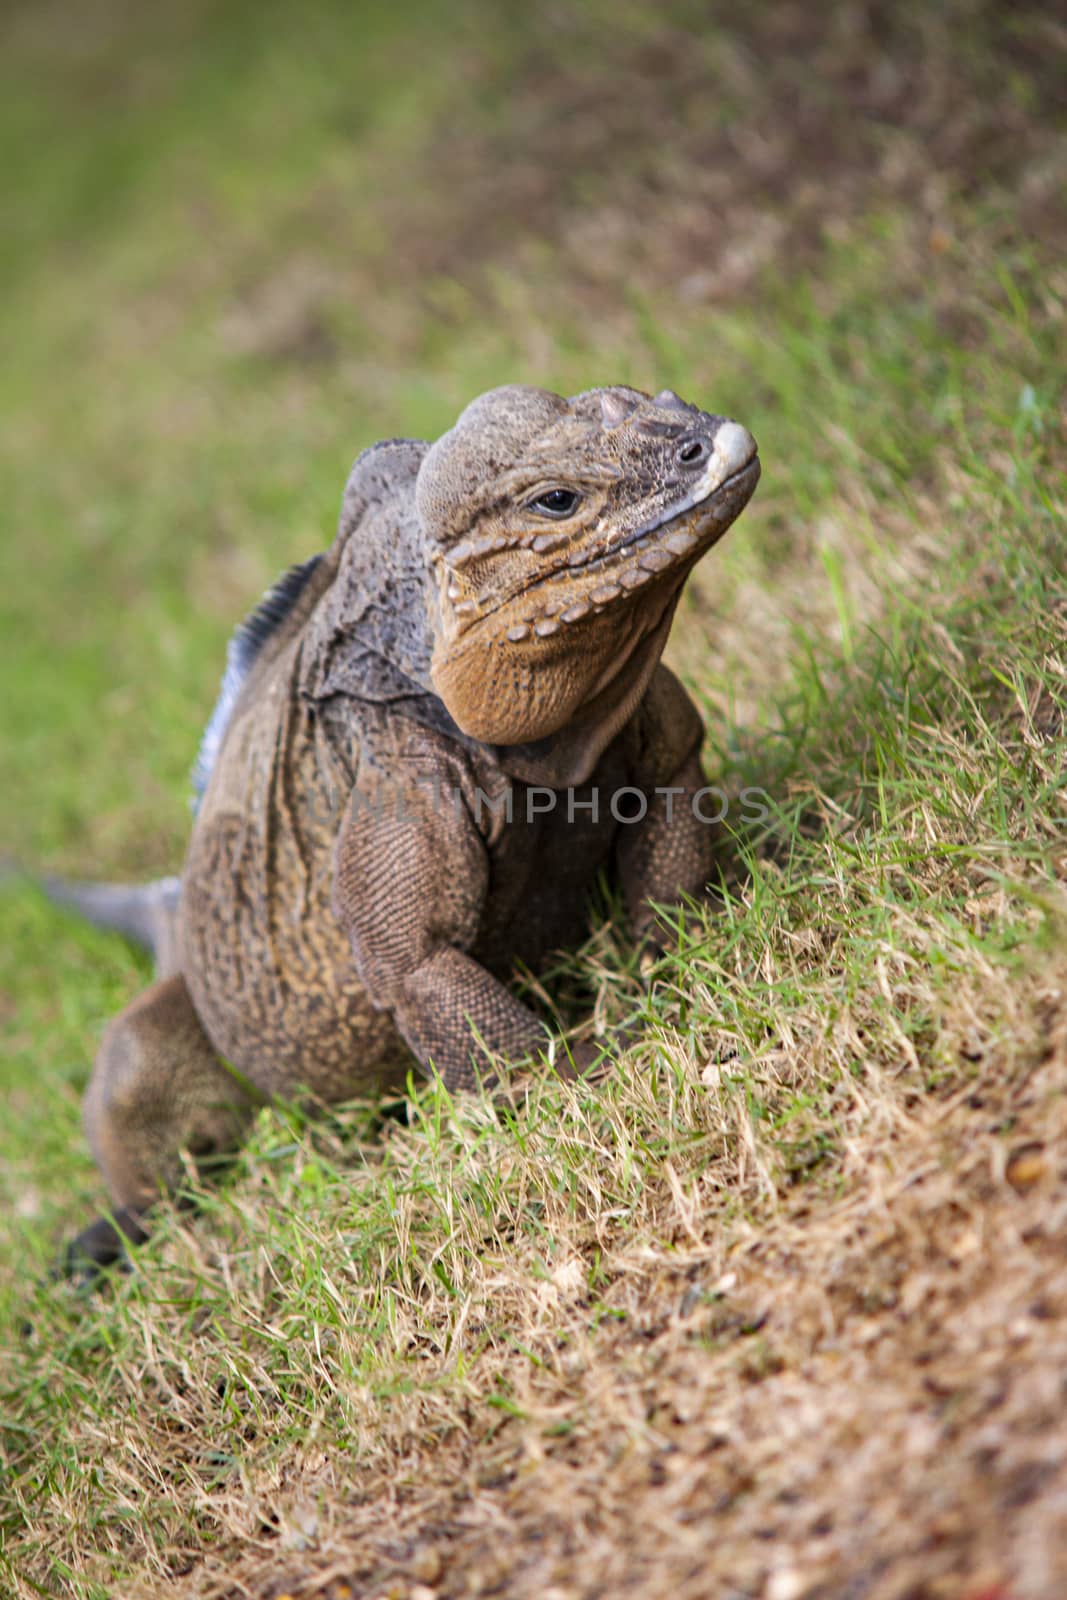 Grey Iguana in Dominican Republic 4 by pippocarlot